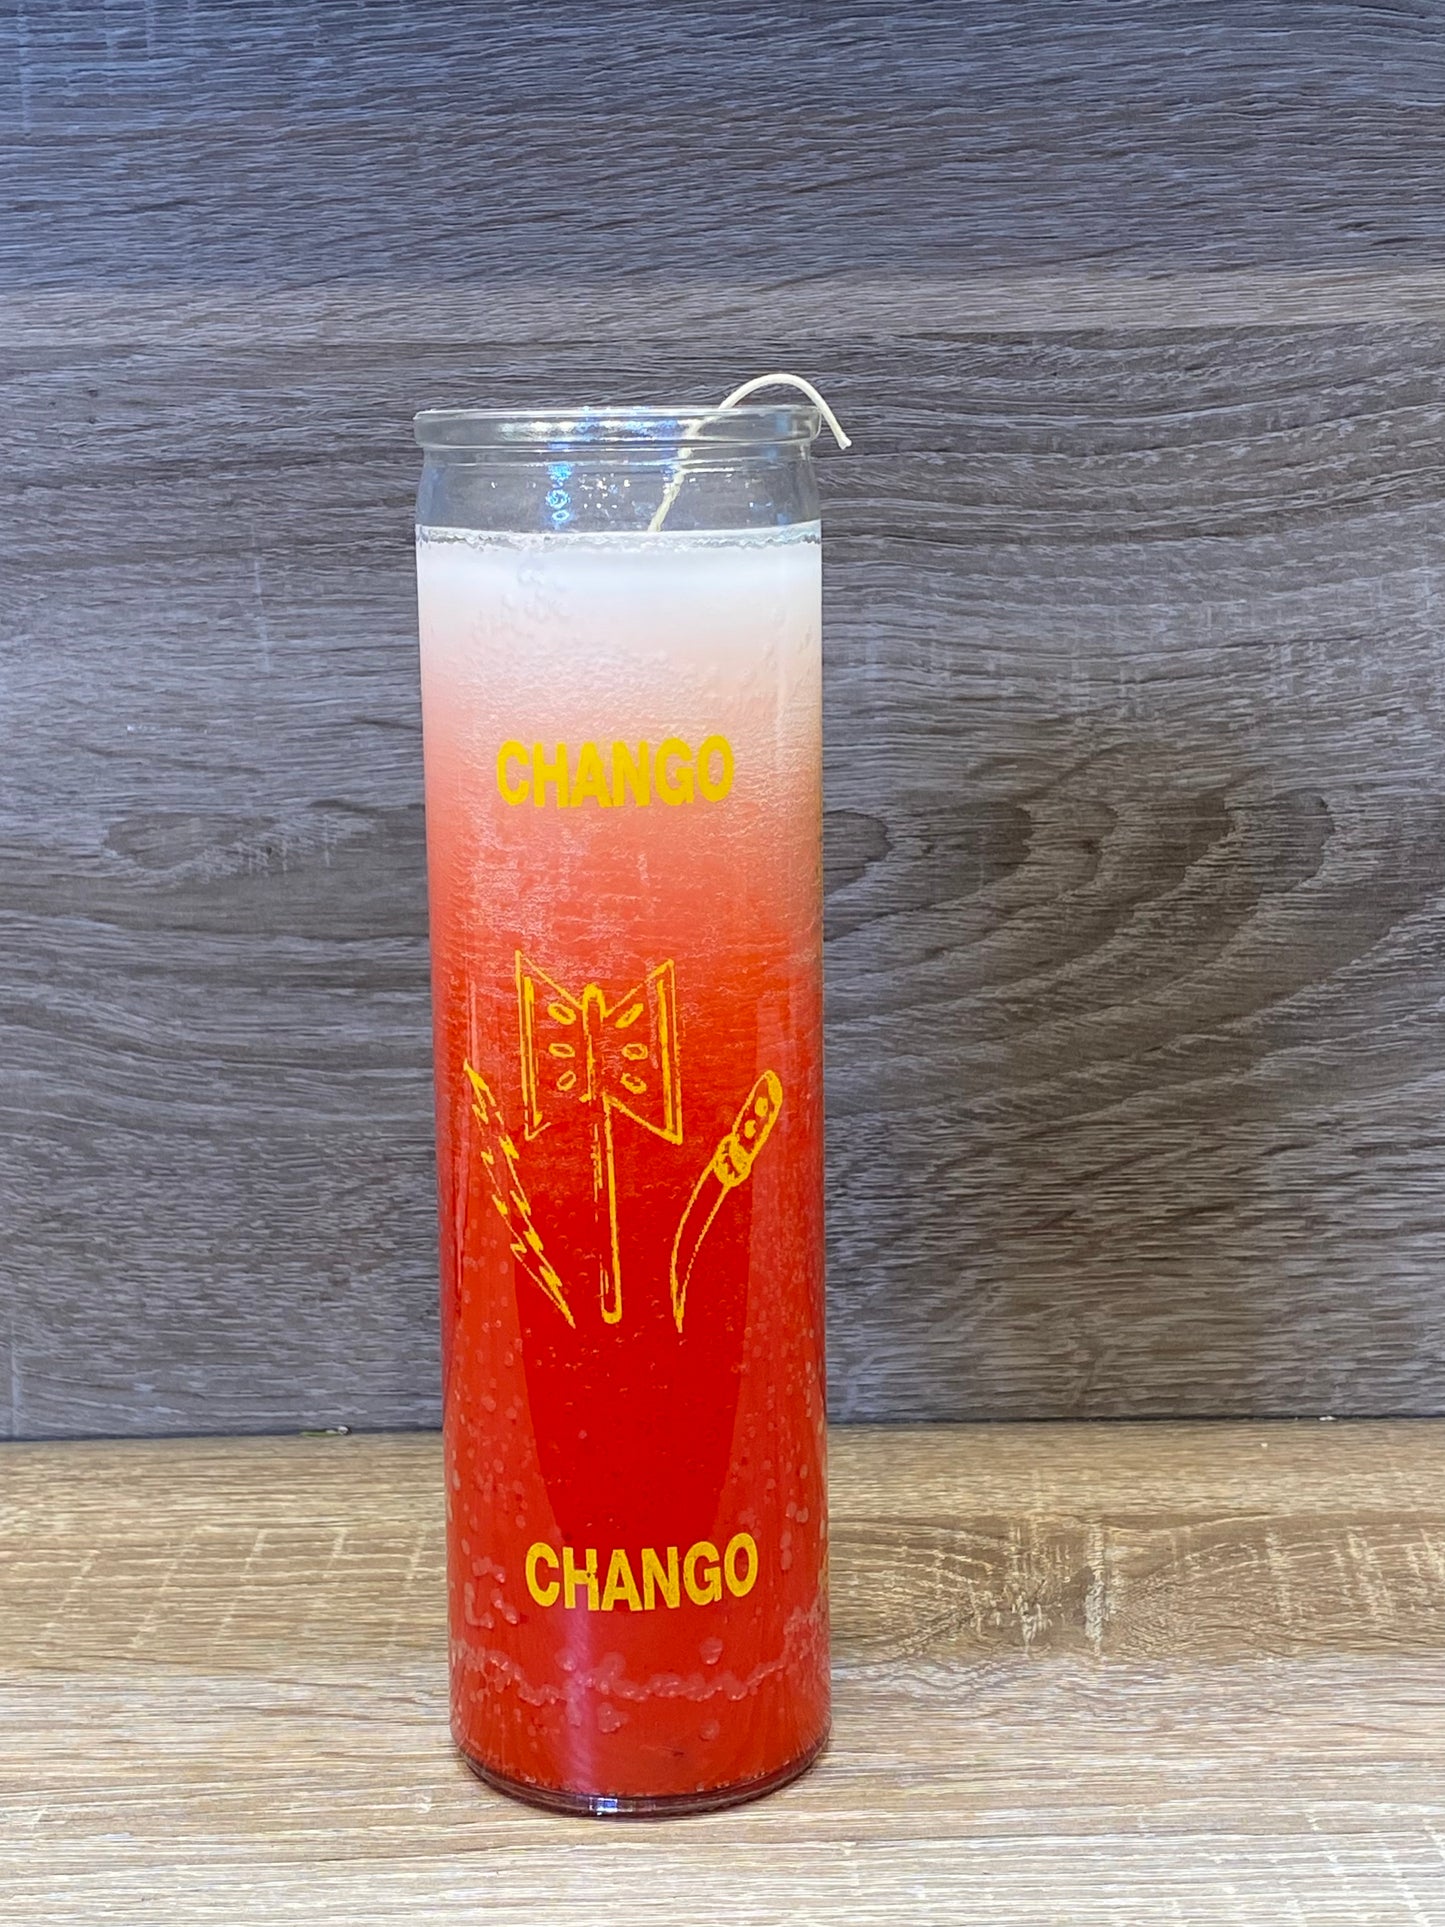 Orisha-Chango 7 Day Candle, White/Red